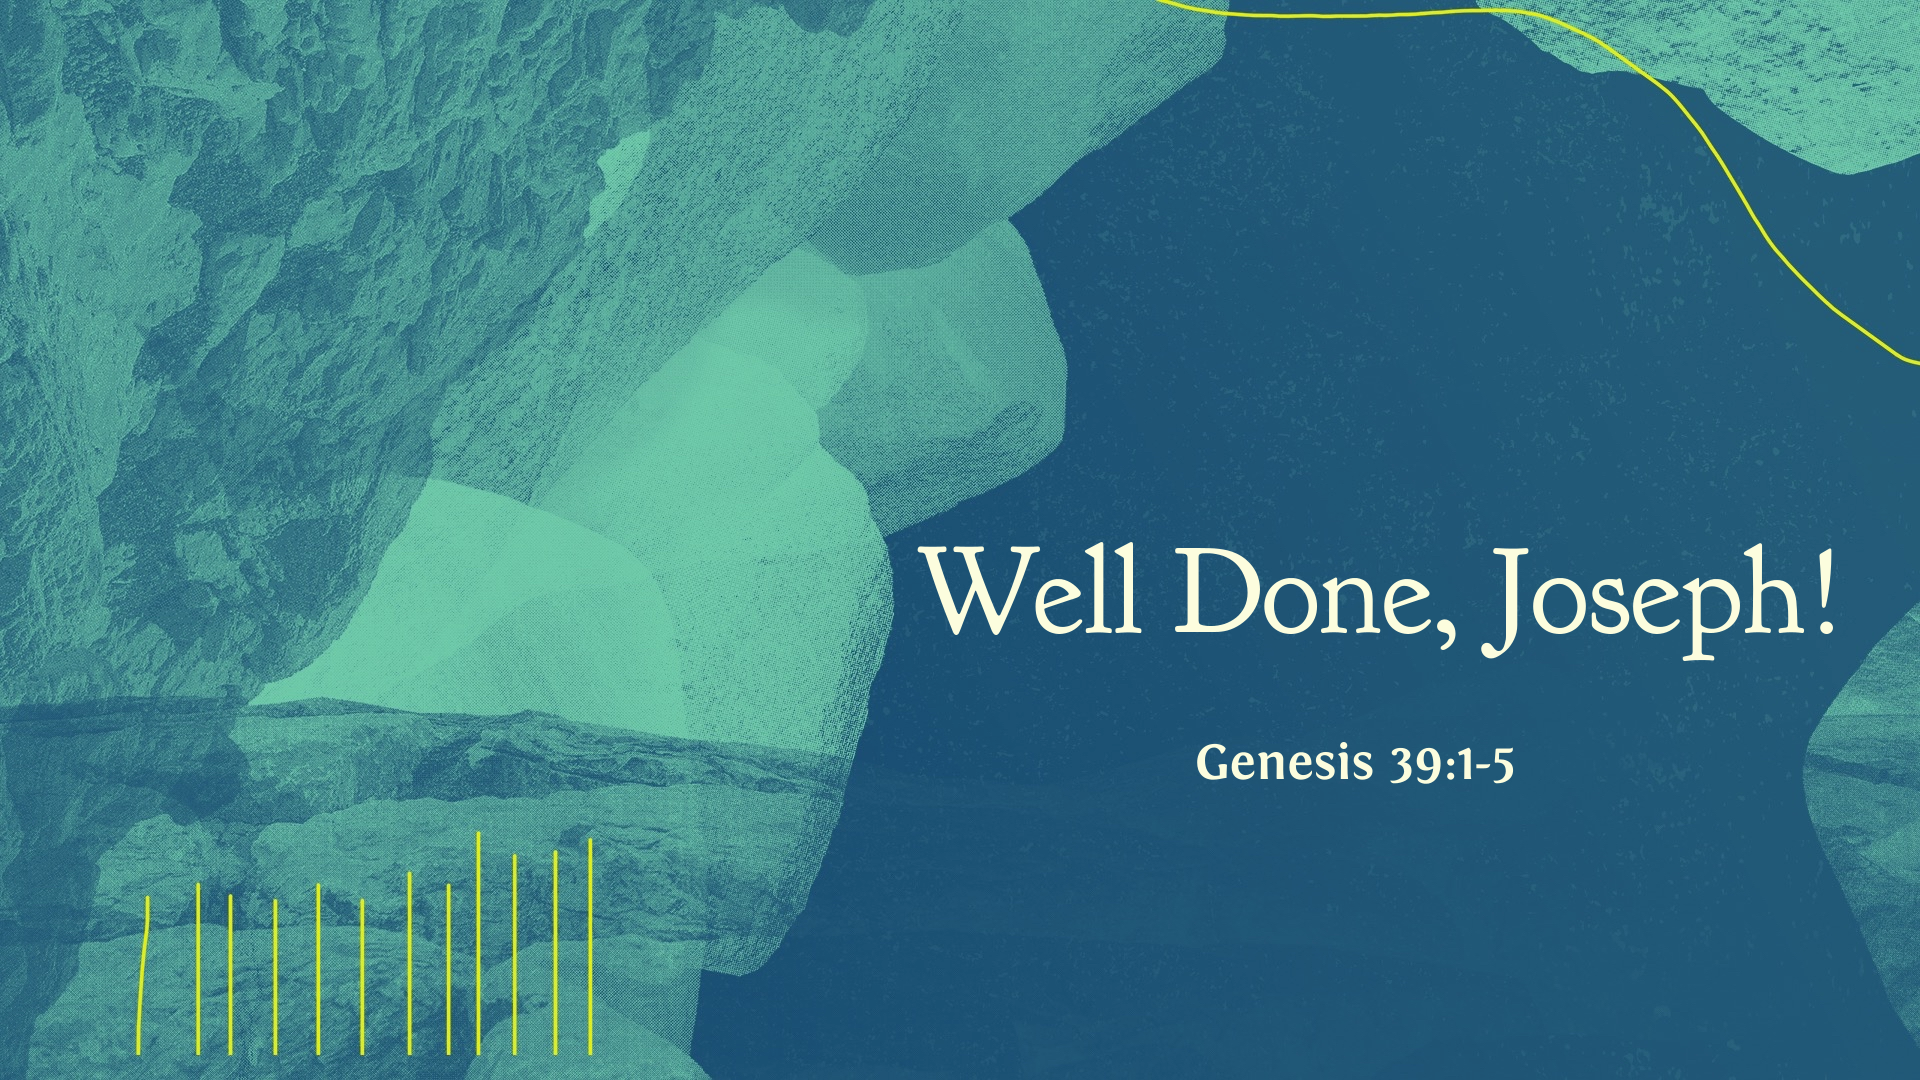 May 2, 2021 - Well Done, Joseph! (Video) Genesis 39: 1-5